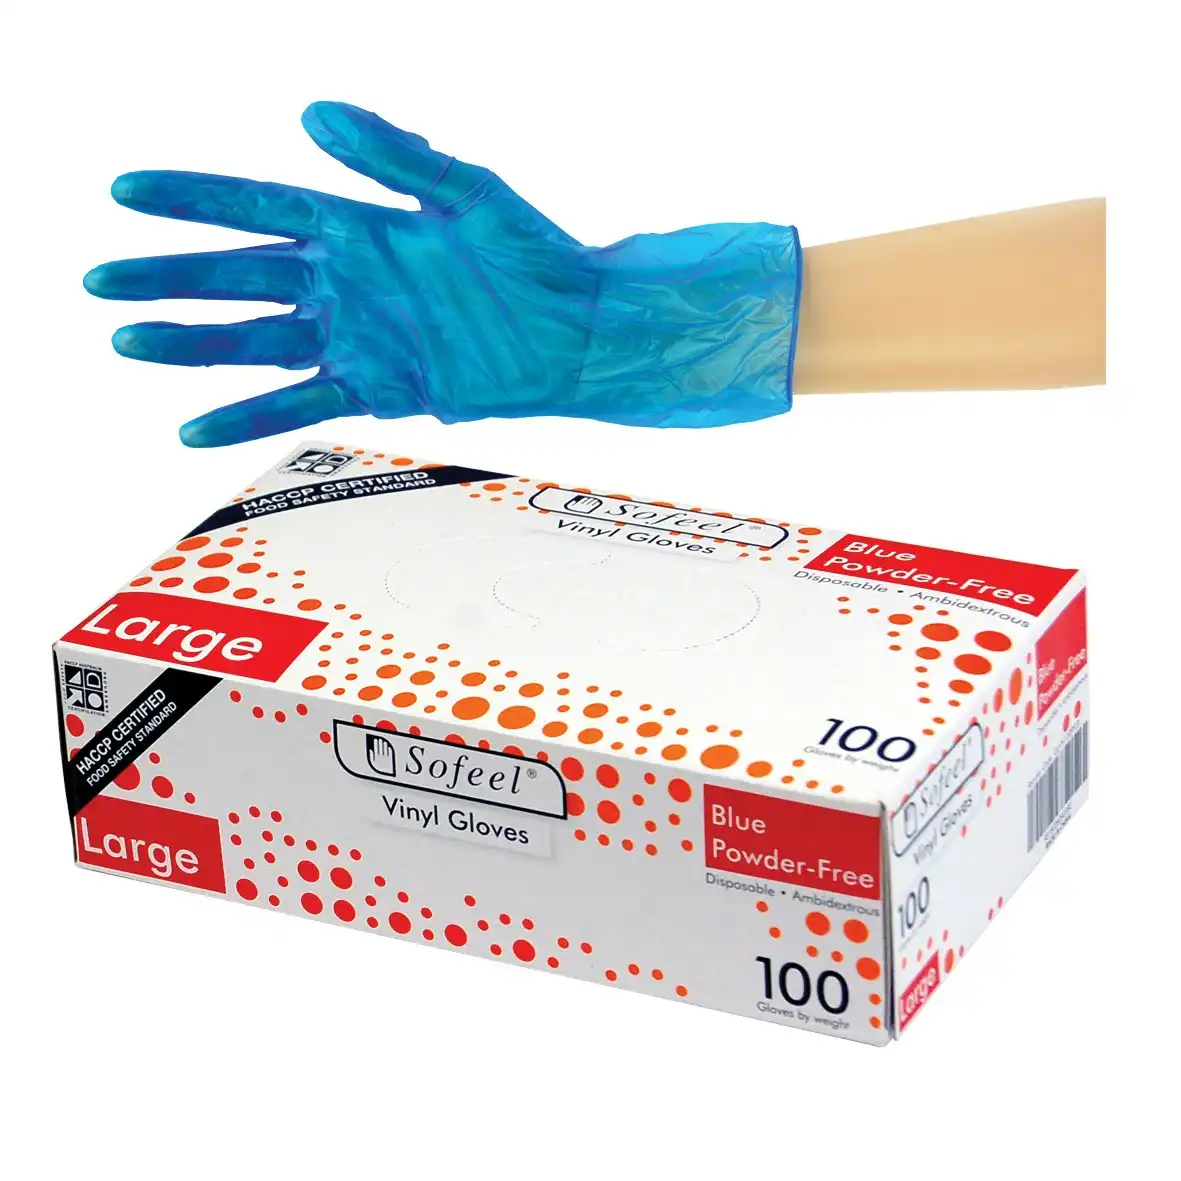 Sofeel Vinyl Powder Free Gloves 5.0g Large Blue HACCP Grade 100 Box